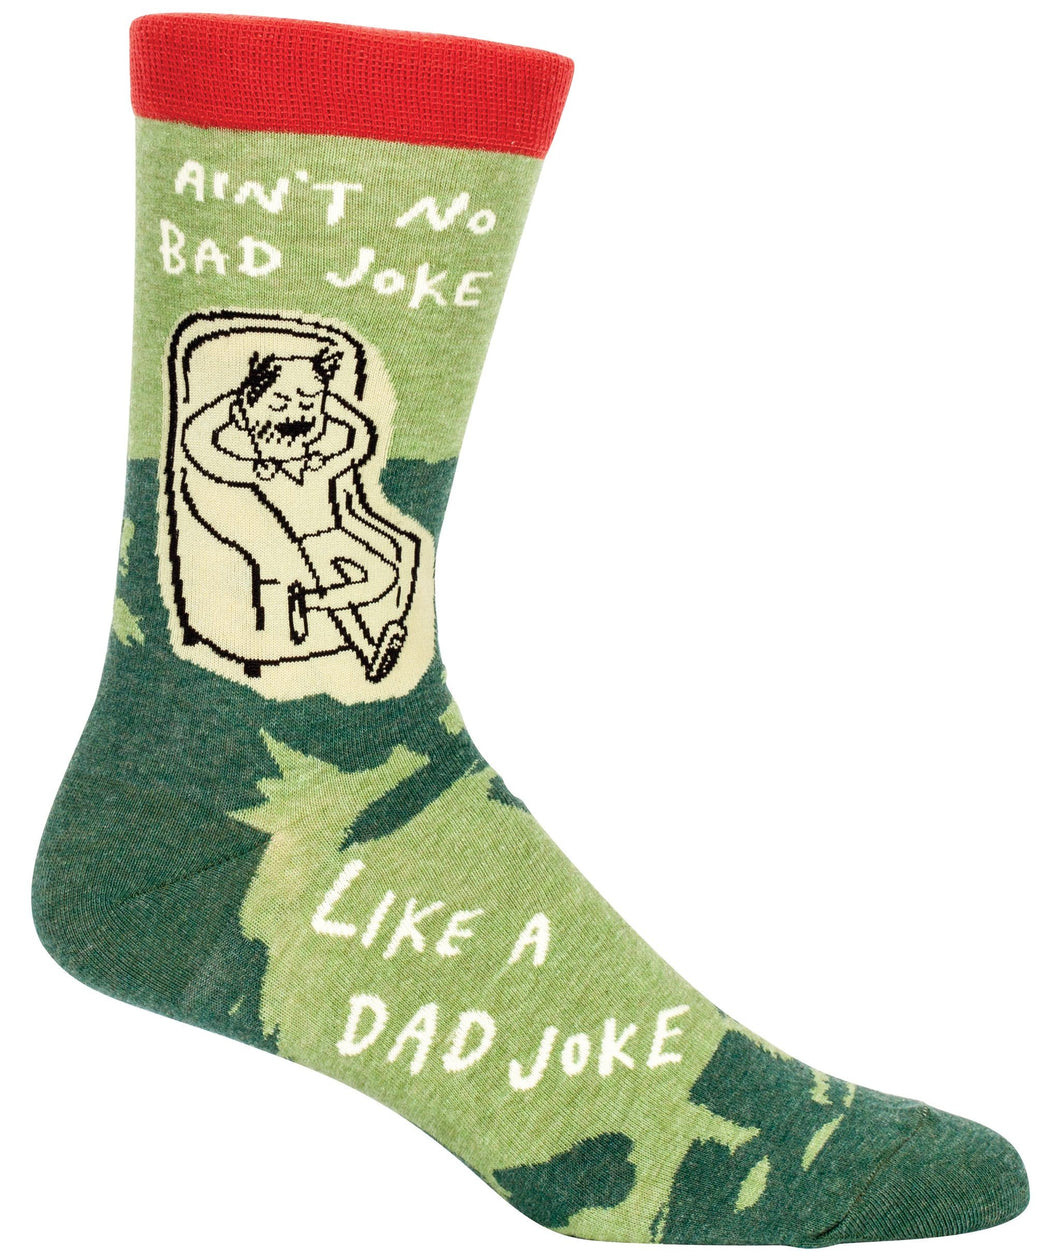 Dad Joke Mens Socks